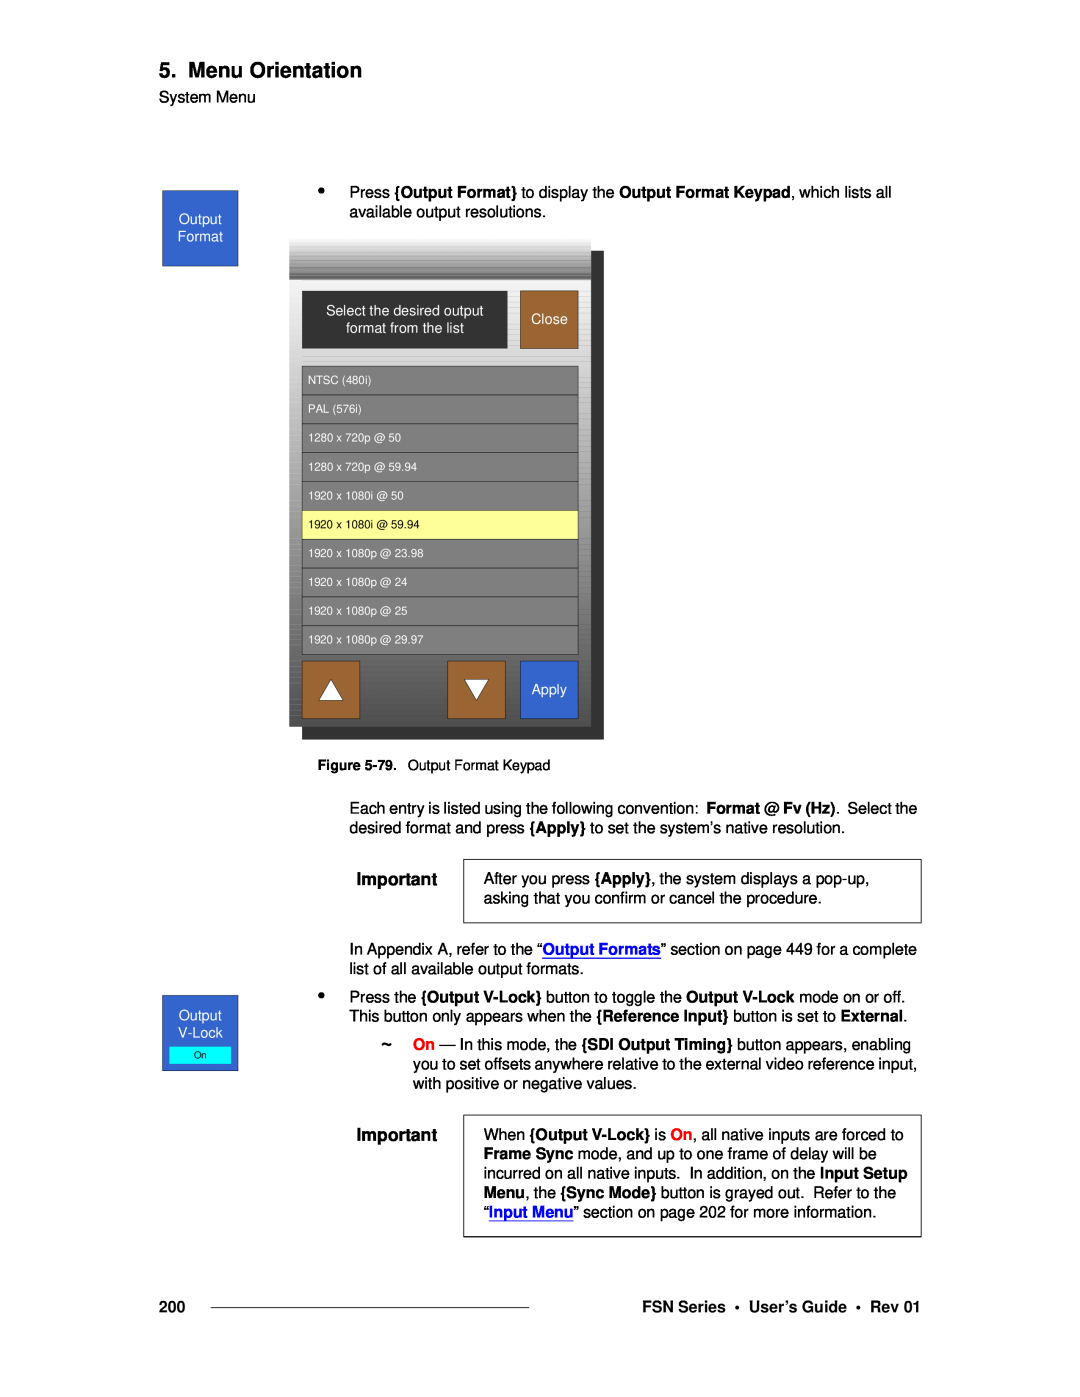 Barco 26-0702000-00 manual Menu Orientation, FSN Series • User’s Guide • Rev 